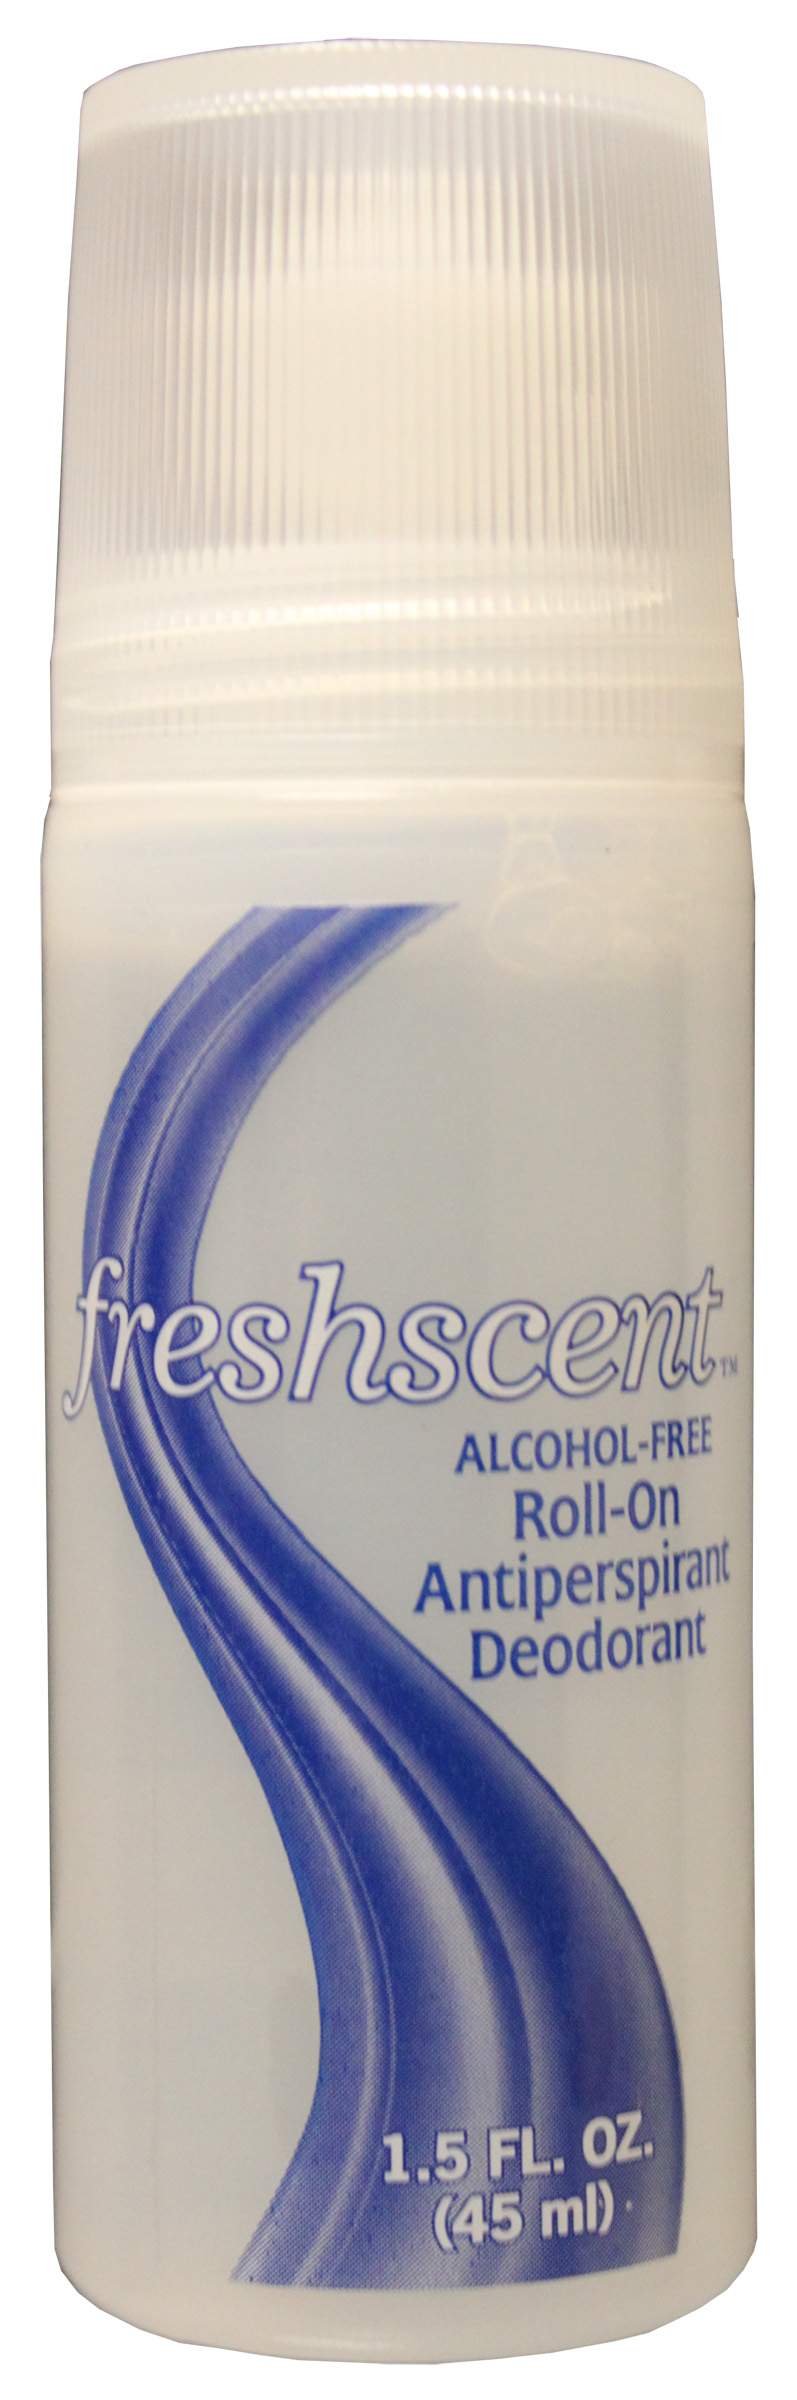 Freshscent 1.5 oz Anti-PerspirAnt CleAr Roll-On DeodorAnt